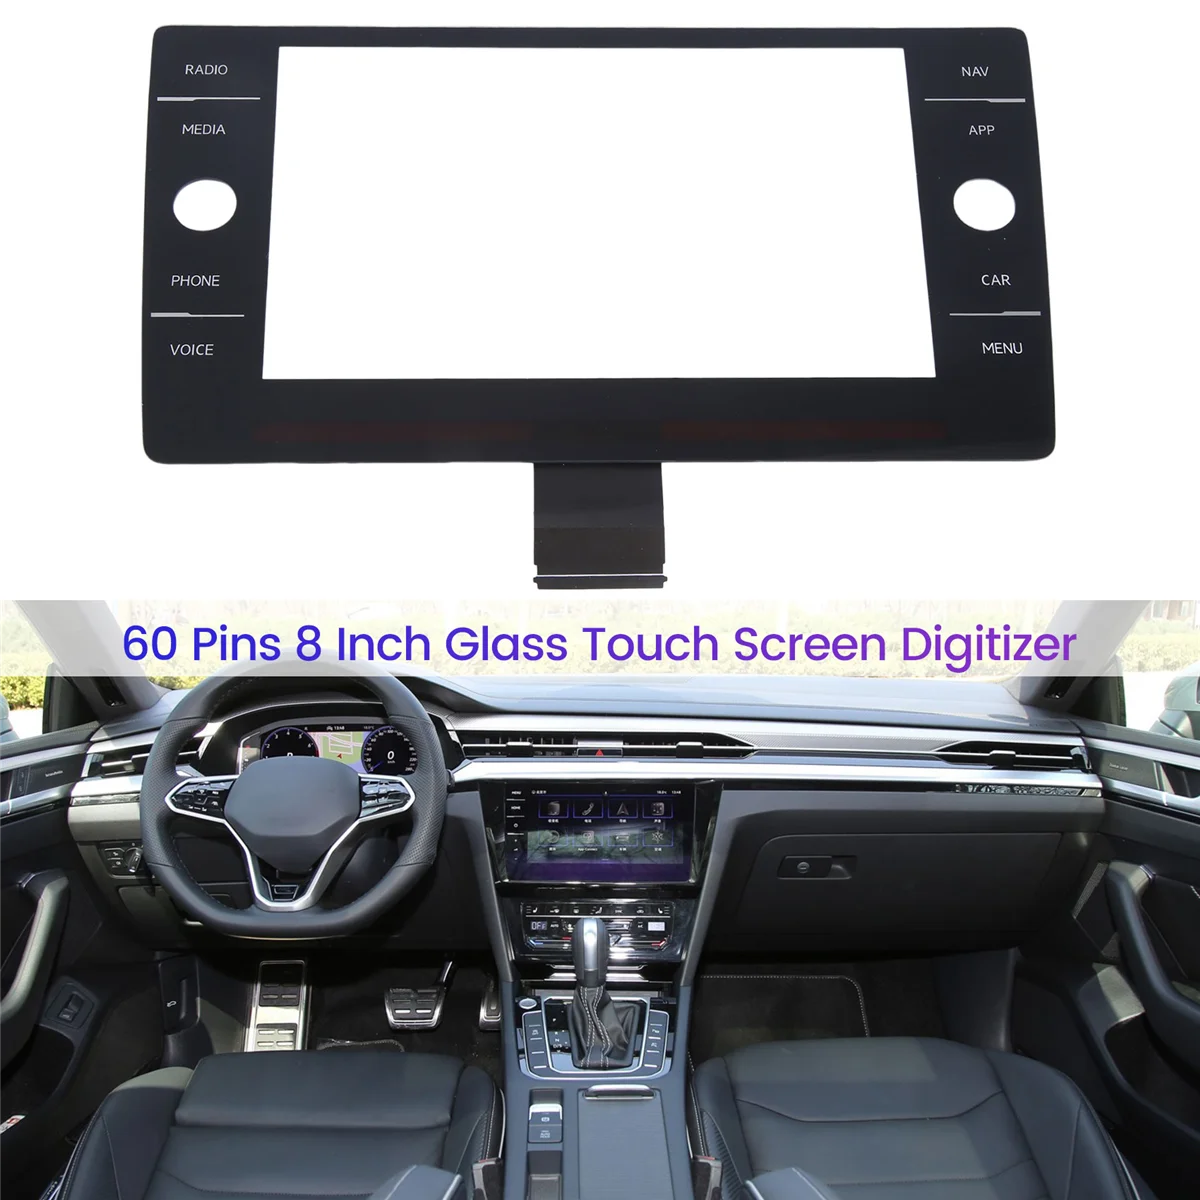 

60 Pins 8 Inch Glass Touch Screen Digitizer for VW MK7 Golf 7 7.5 Passat B8 Polo MK6 Radio 5G6919605B 5G6919605A